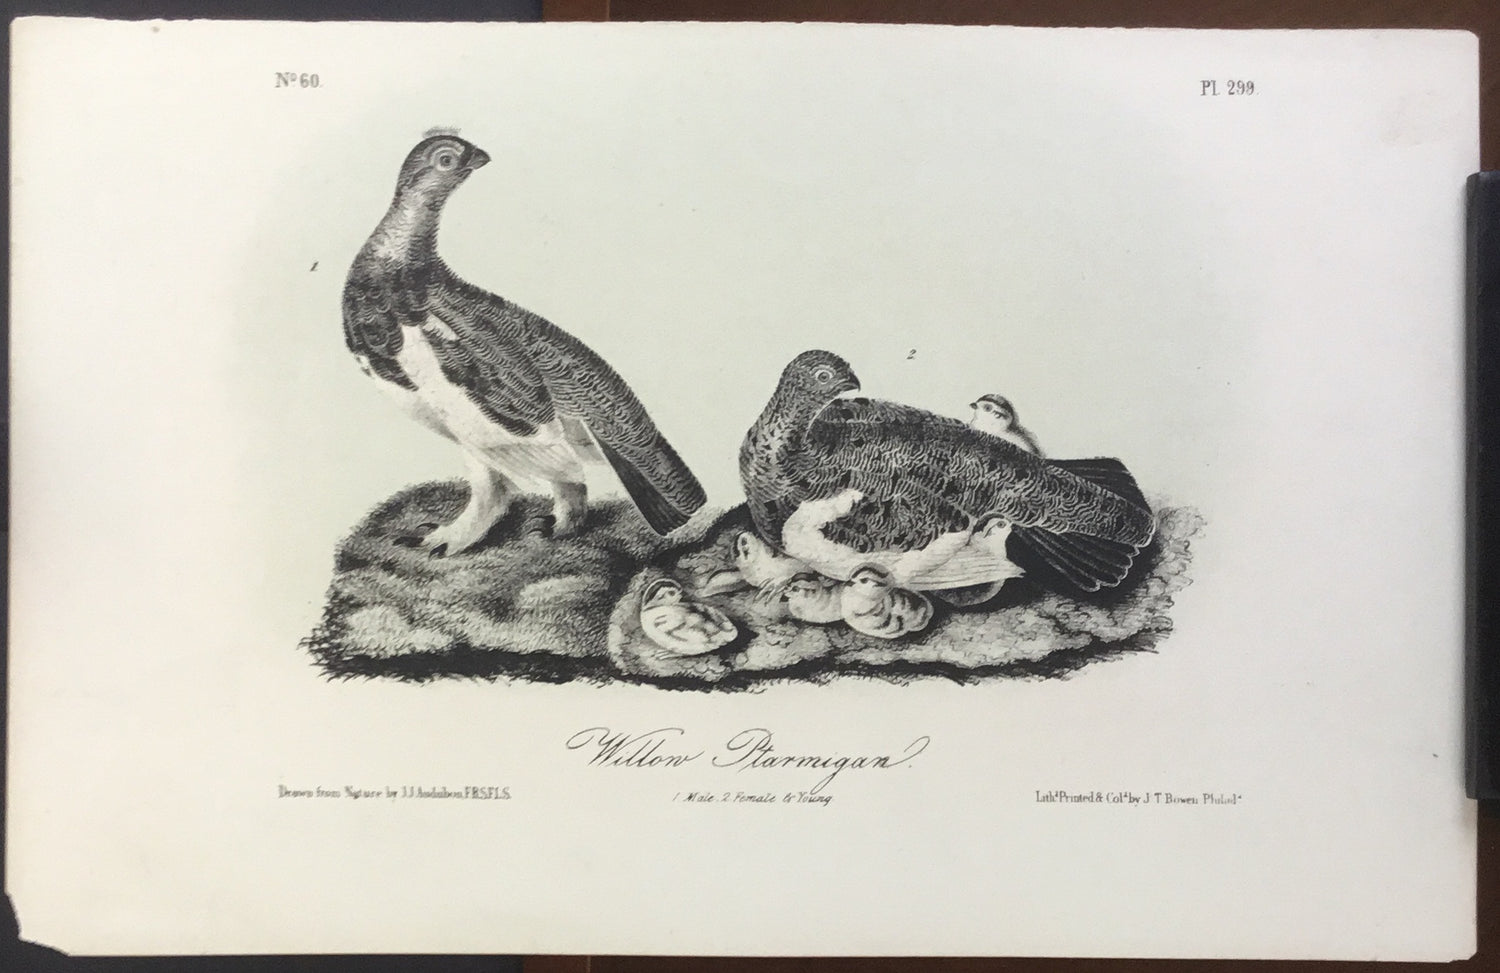 Audubon Octavo Willow Ptarmigan, plate 299, uncolored test sheet, 7 x 11